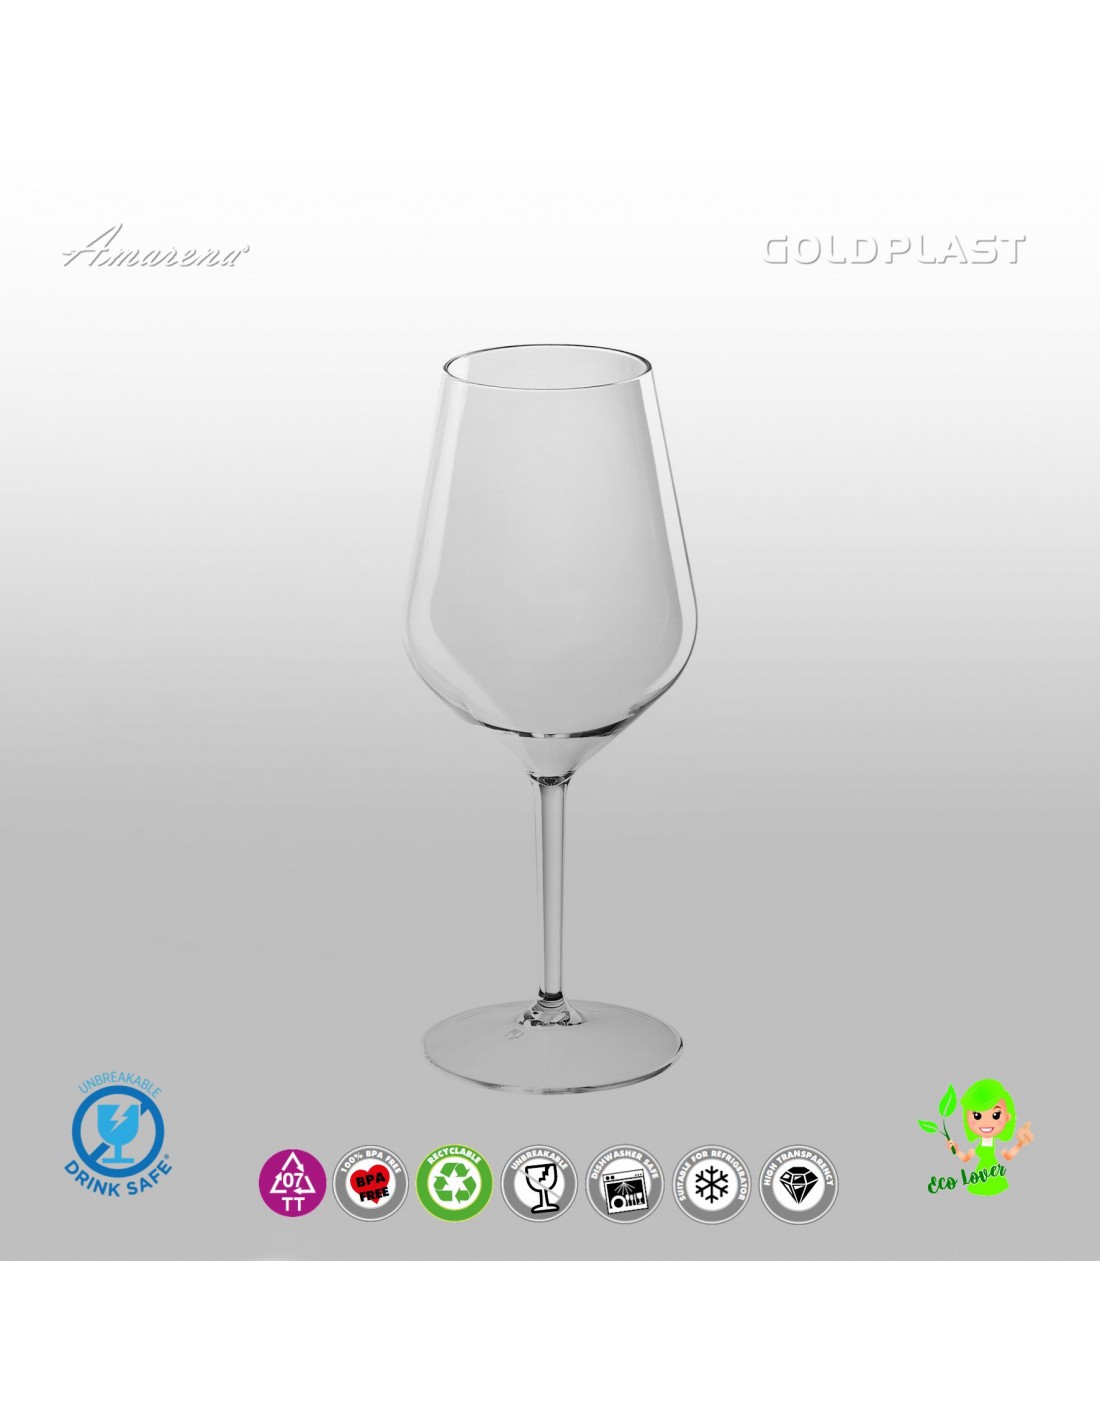 https://www.amarena.cz/1898-thickbox_default/plastova-sklenice-na-vino-cocktail-470ml-nerozbitna-gold-plast.jpg